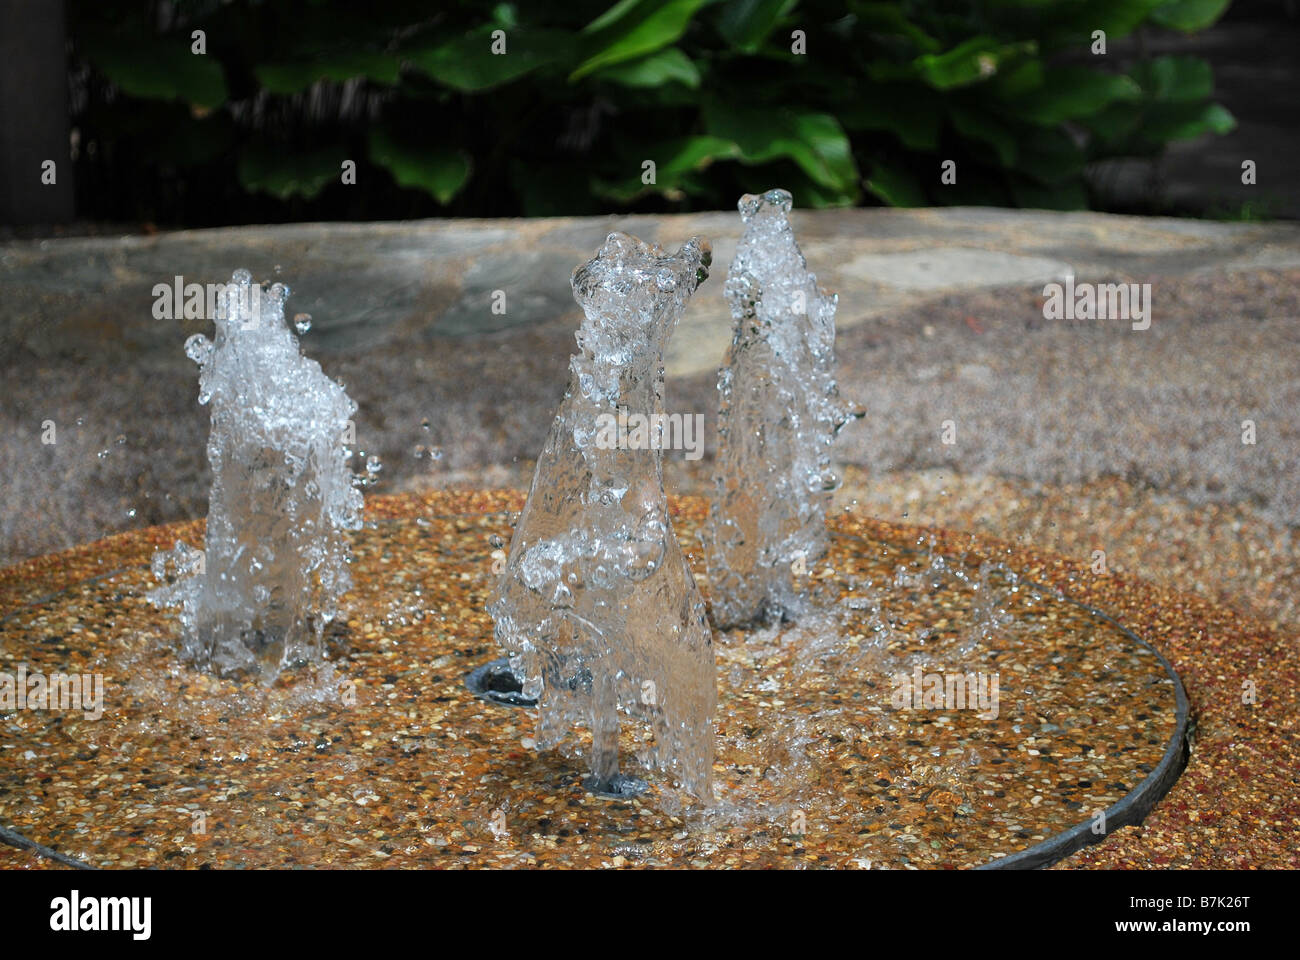 Gushing water in a water fountain Stock Photo